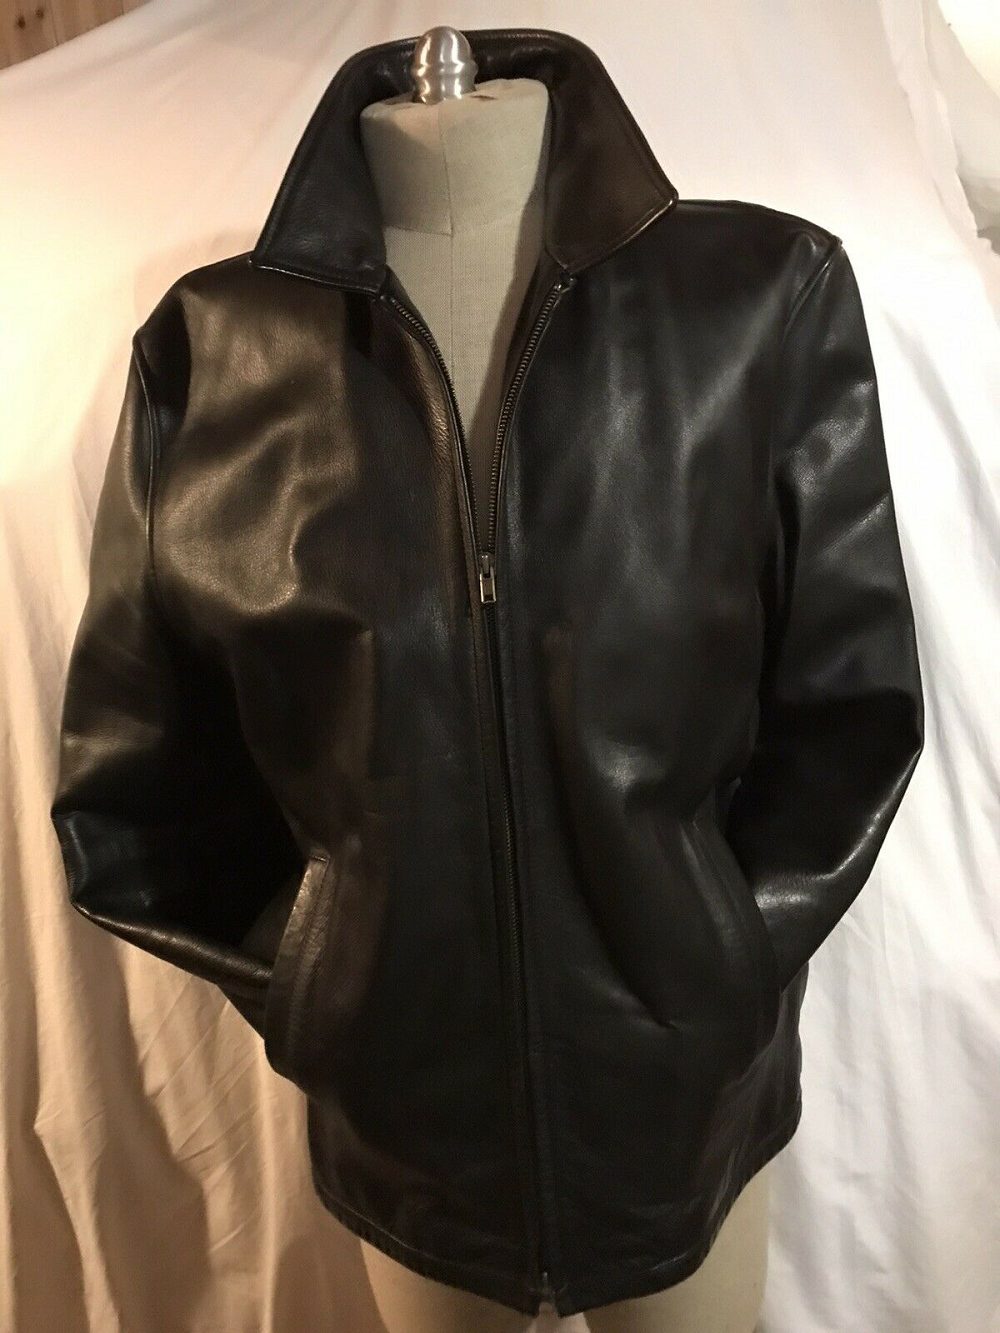 Banana Republic Black Leather Jacket - A2 Jackets